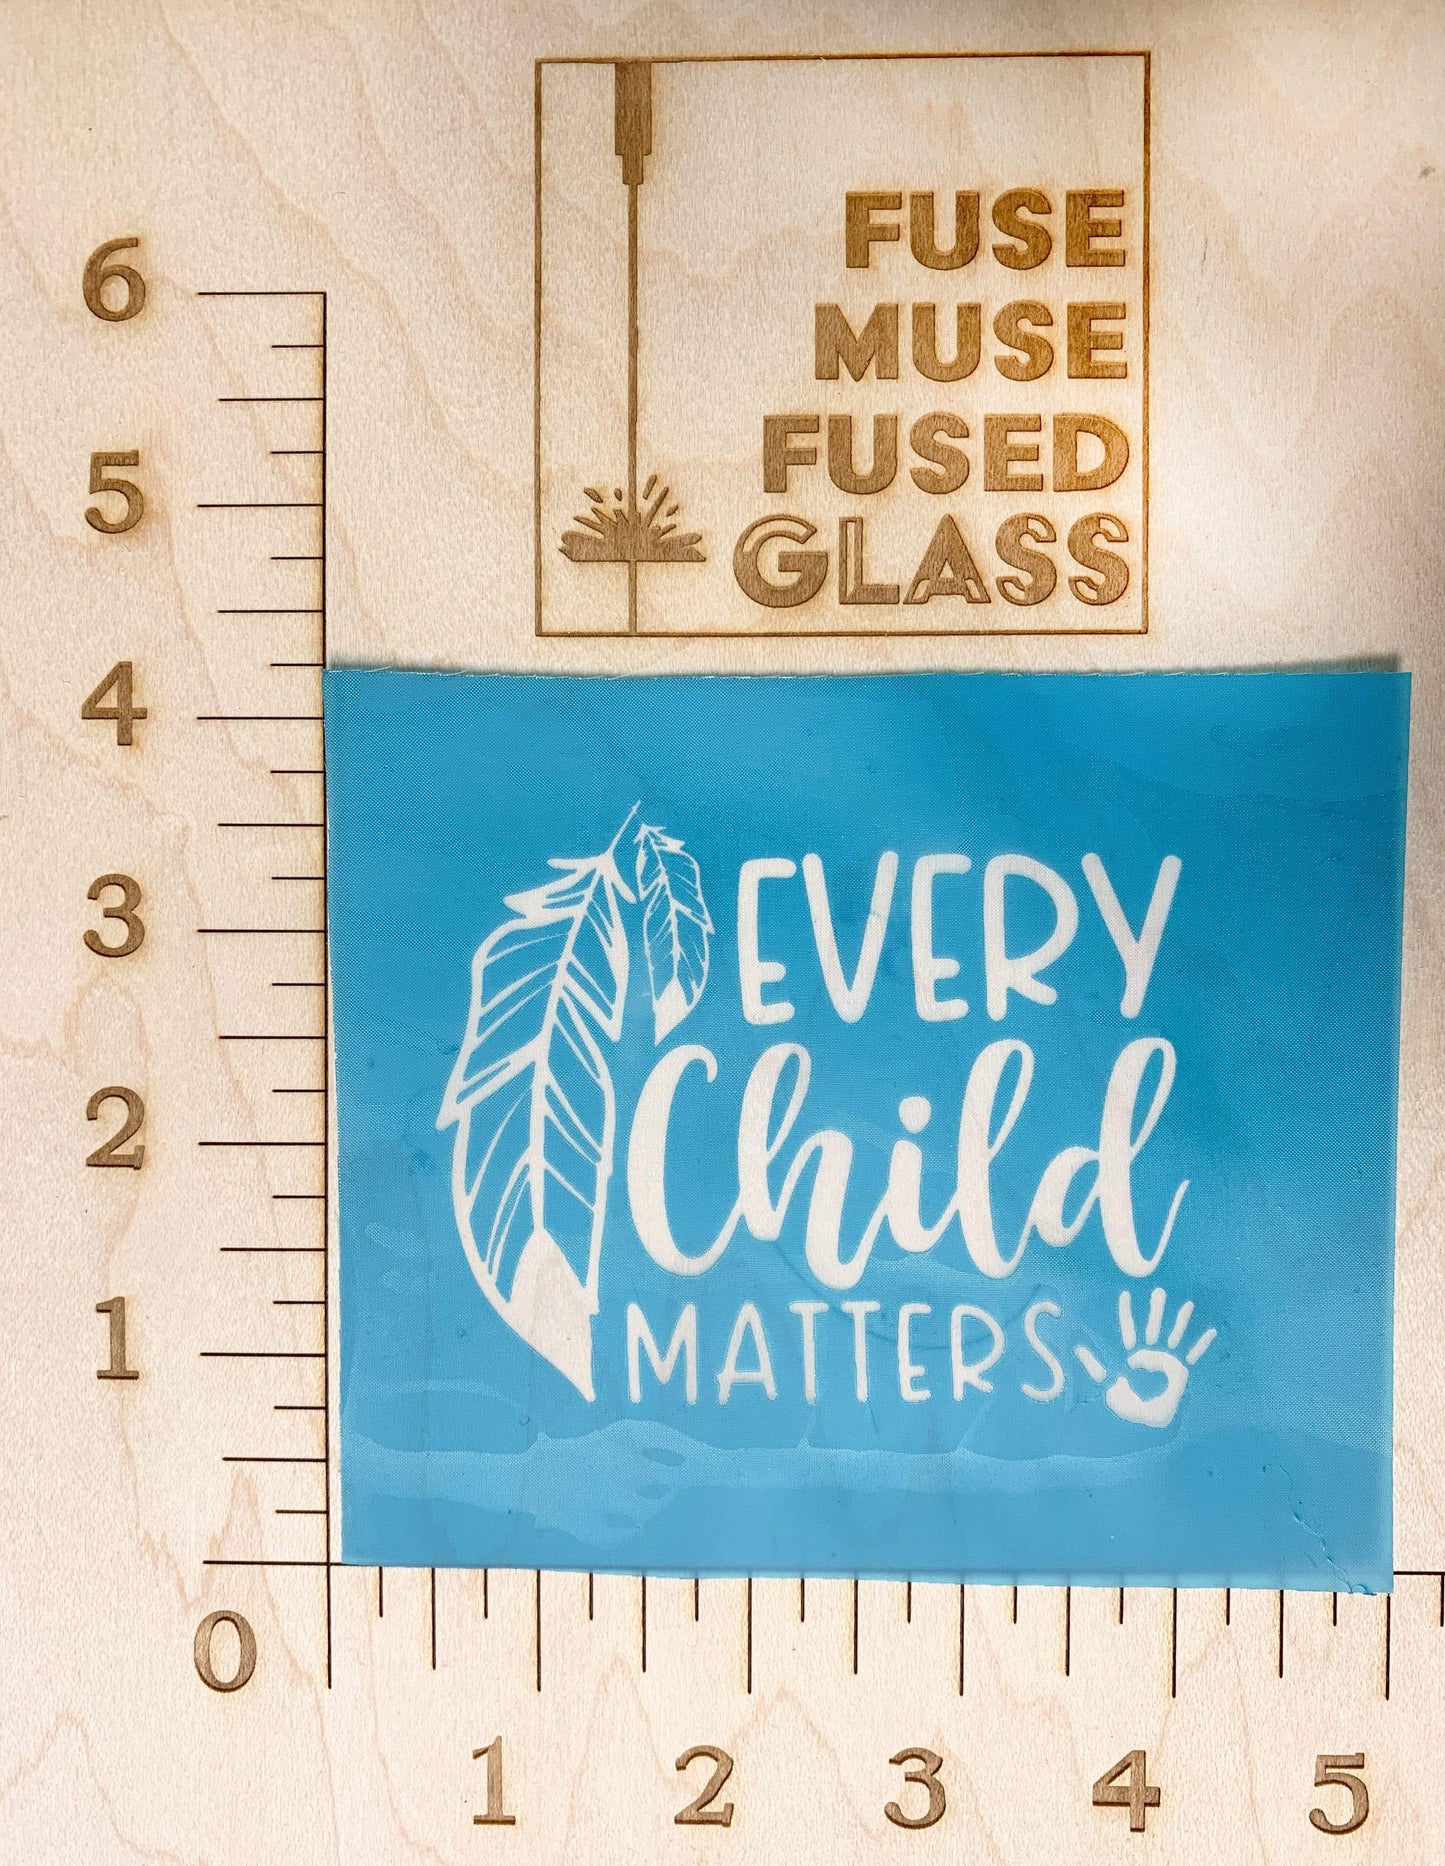 Every Child Matters Silk Screen Stencil